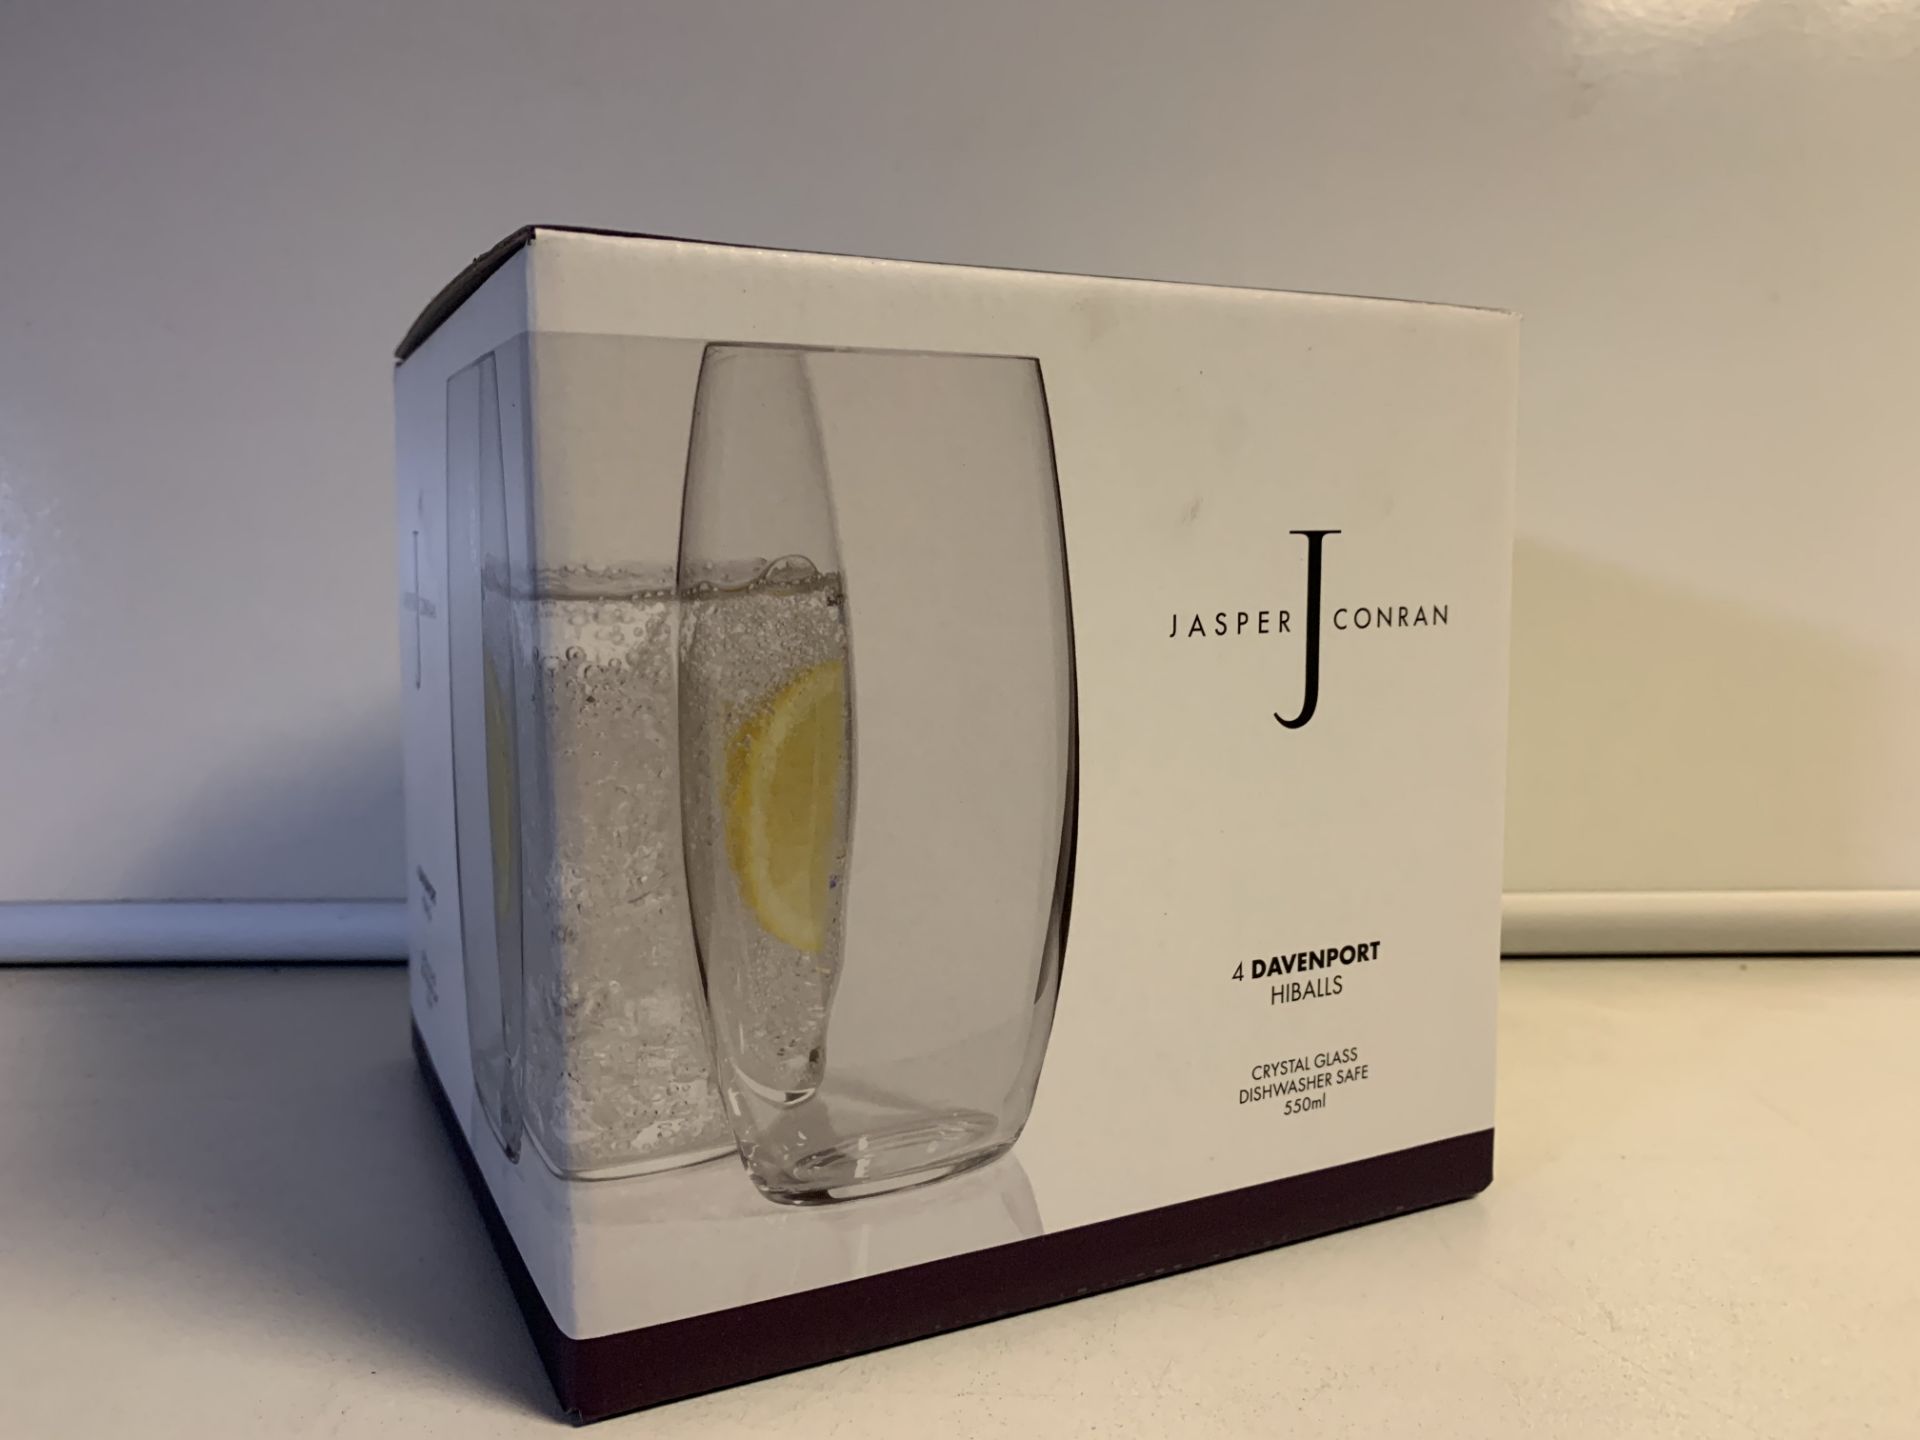 5 x NEW BOXED SETS OF 4 JASPER CONRAN DAVENPORT HIBALL GLASSES. PRICE MARKED AT £25 PER SET